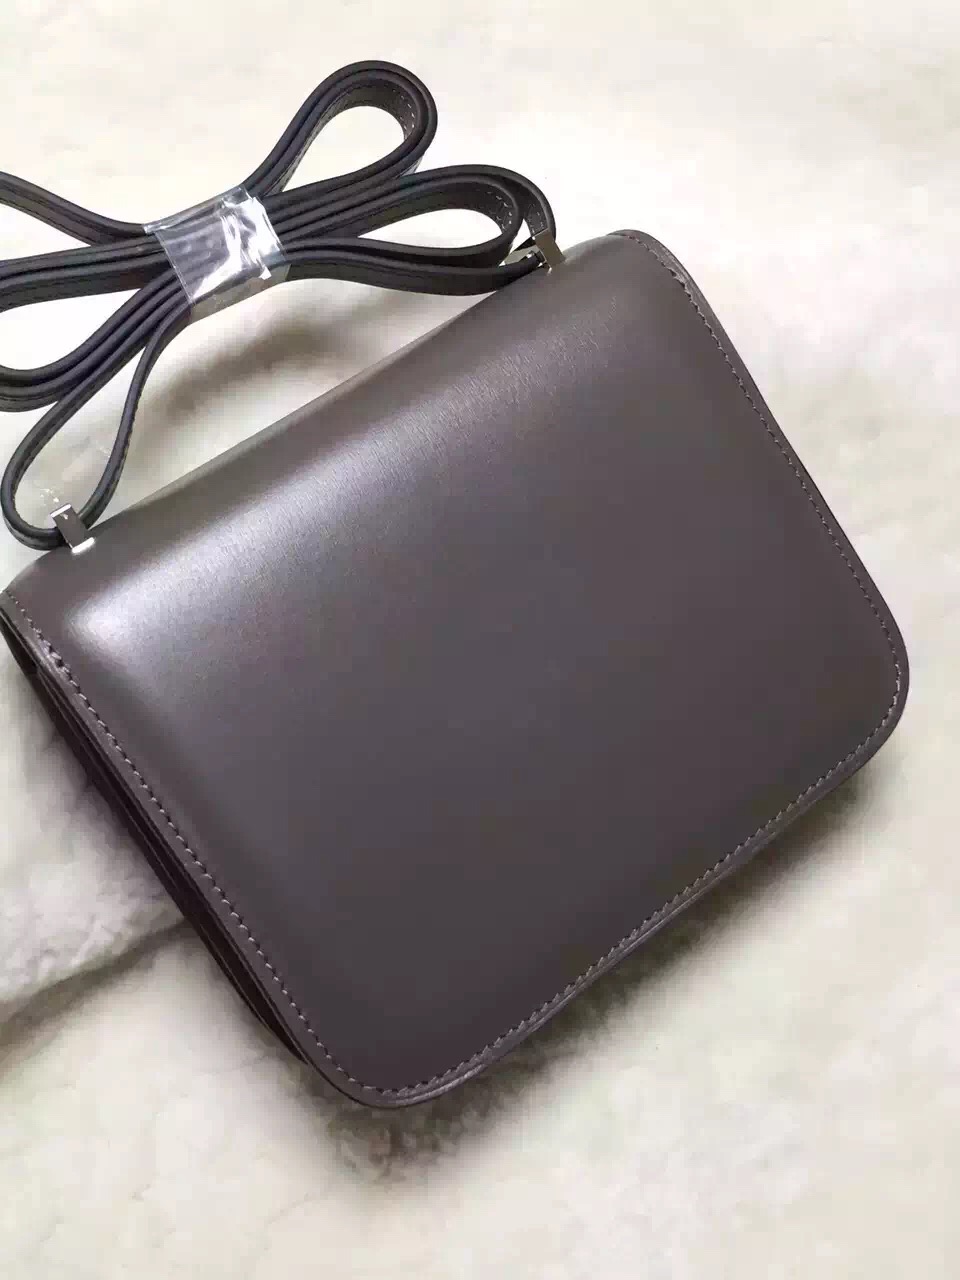 Hermes original box leather constance bag C023 gray